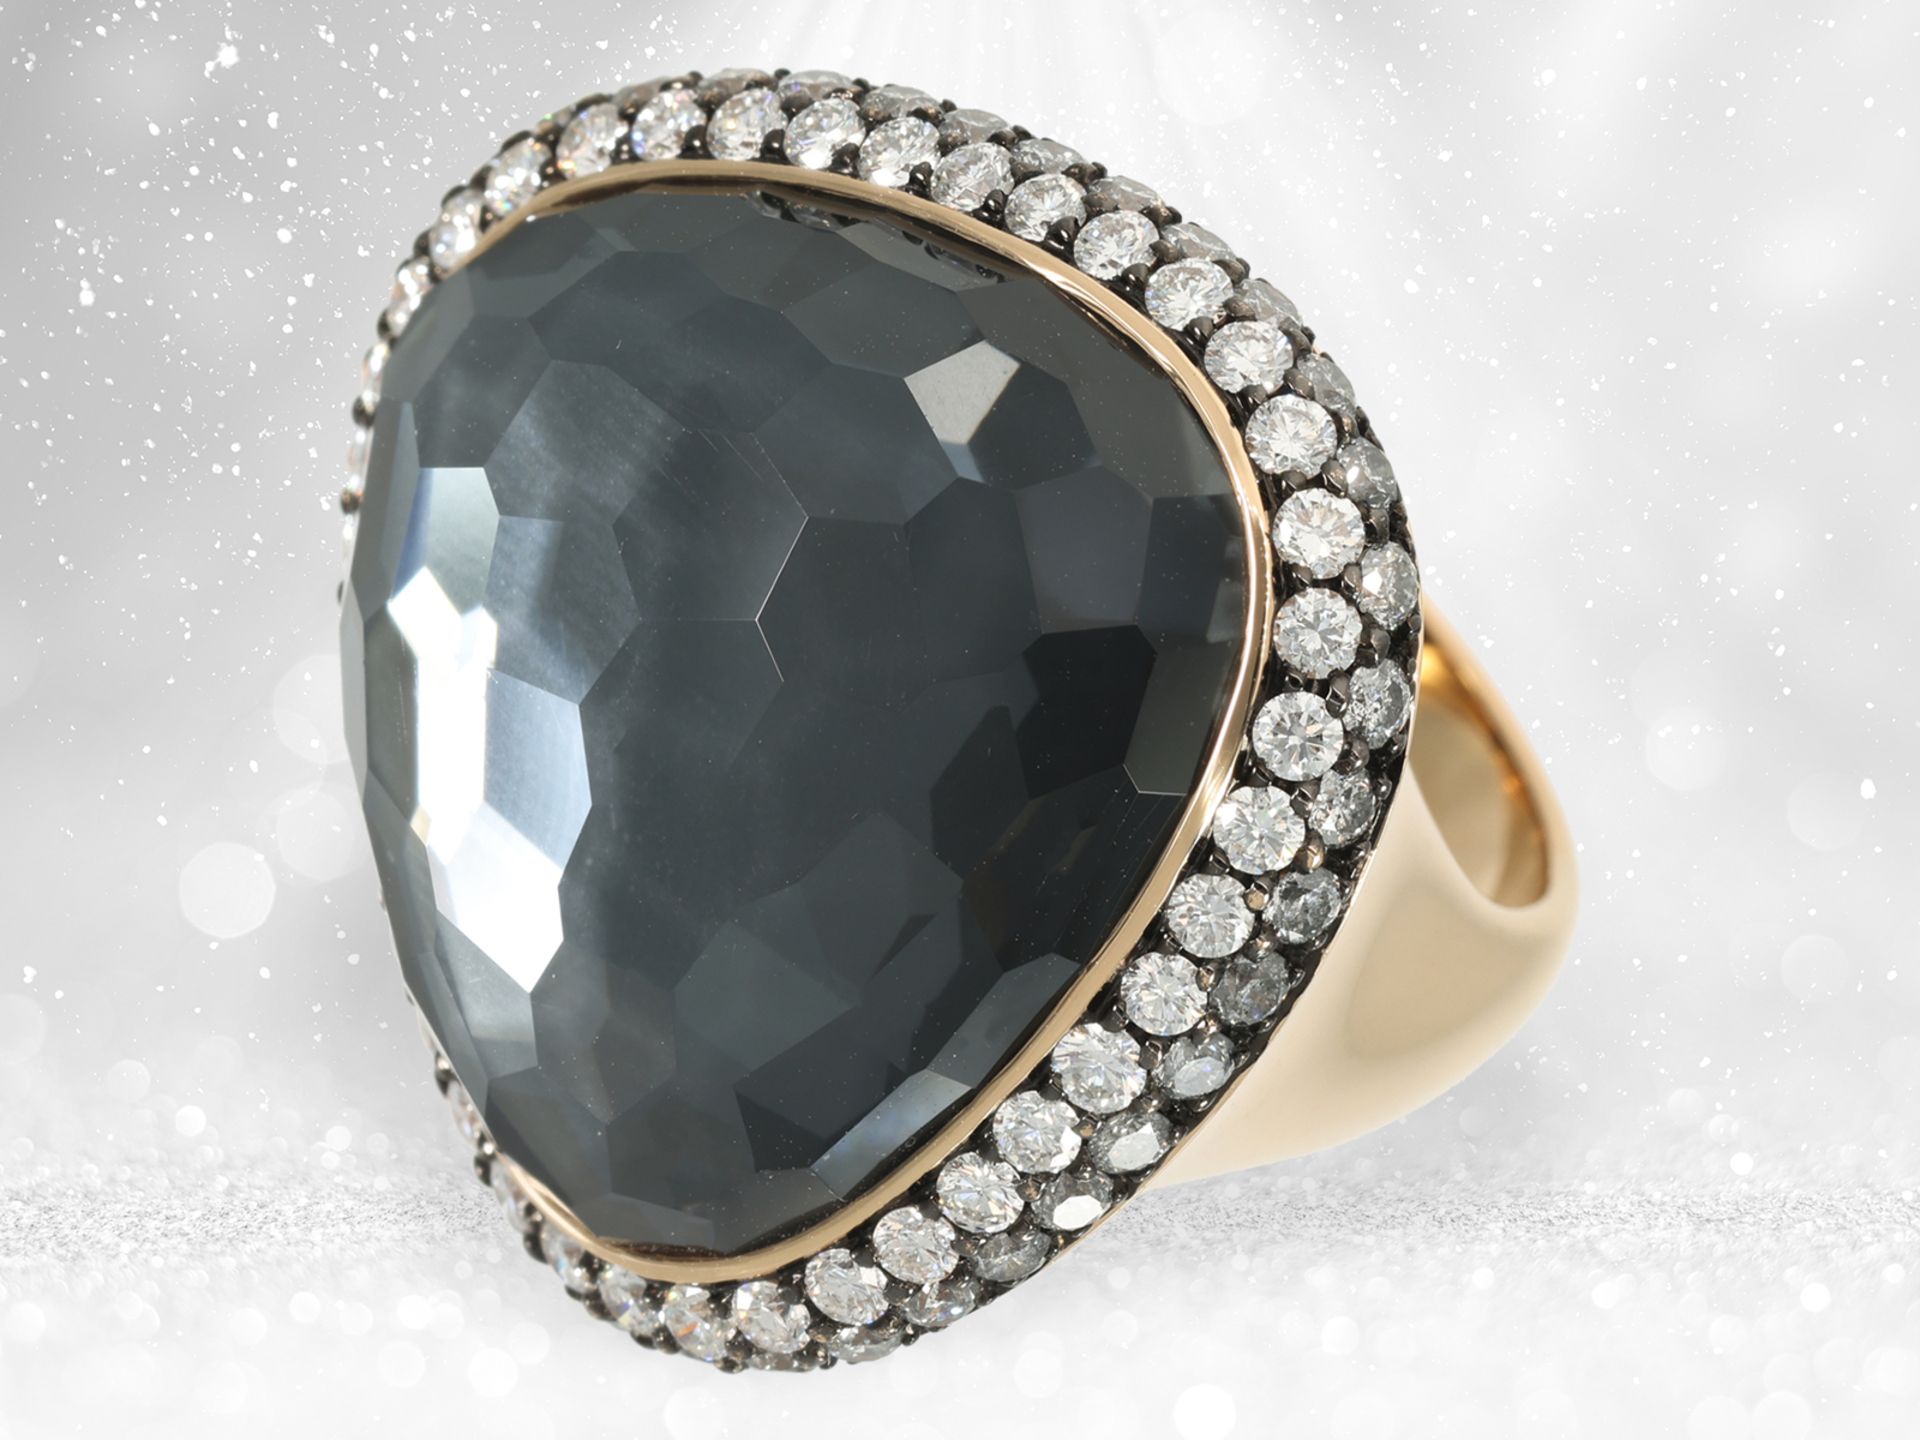 Expensive designer cocktail ring with abundant brilliant-cut diamonds and a quartz, handmade Brahmfe